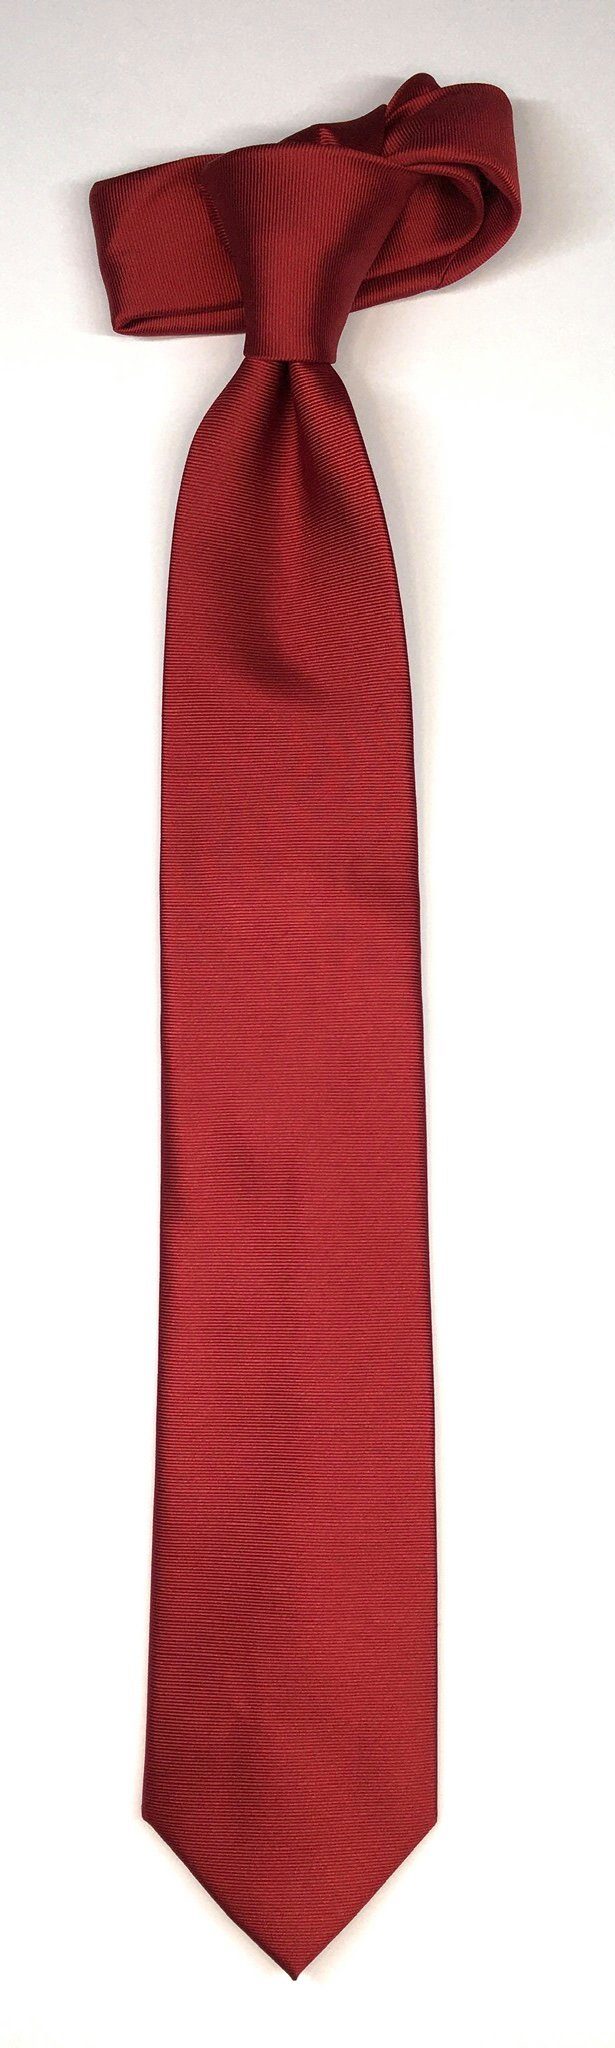 Seidenfalter Krawatte Seidenfalter Krawatte Rot Uni Seidenfalter edlen 7cm im Uni Design Krawatte